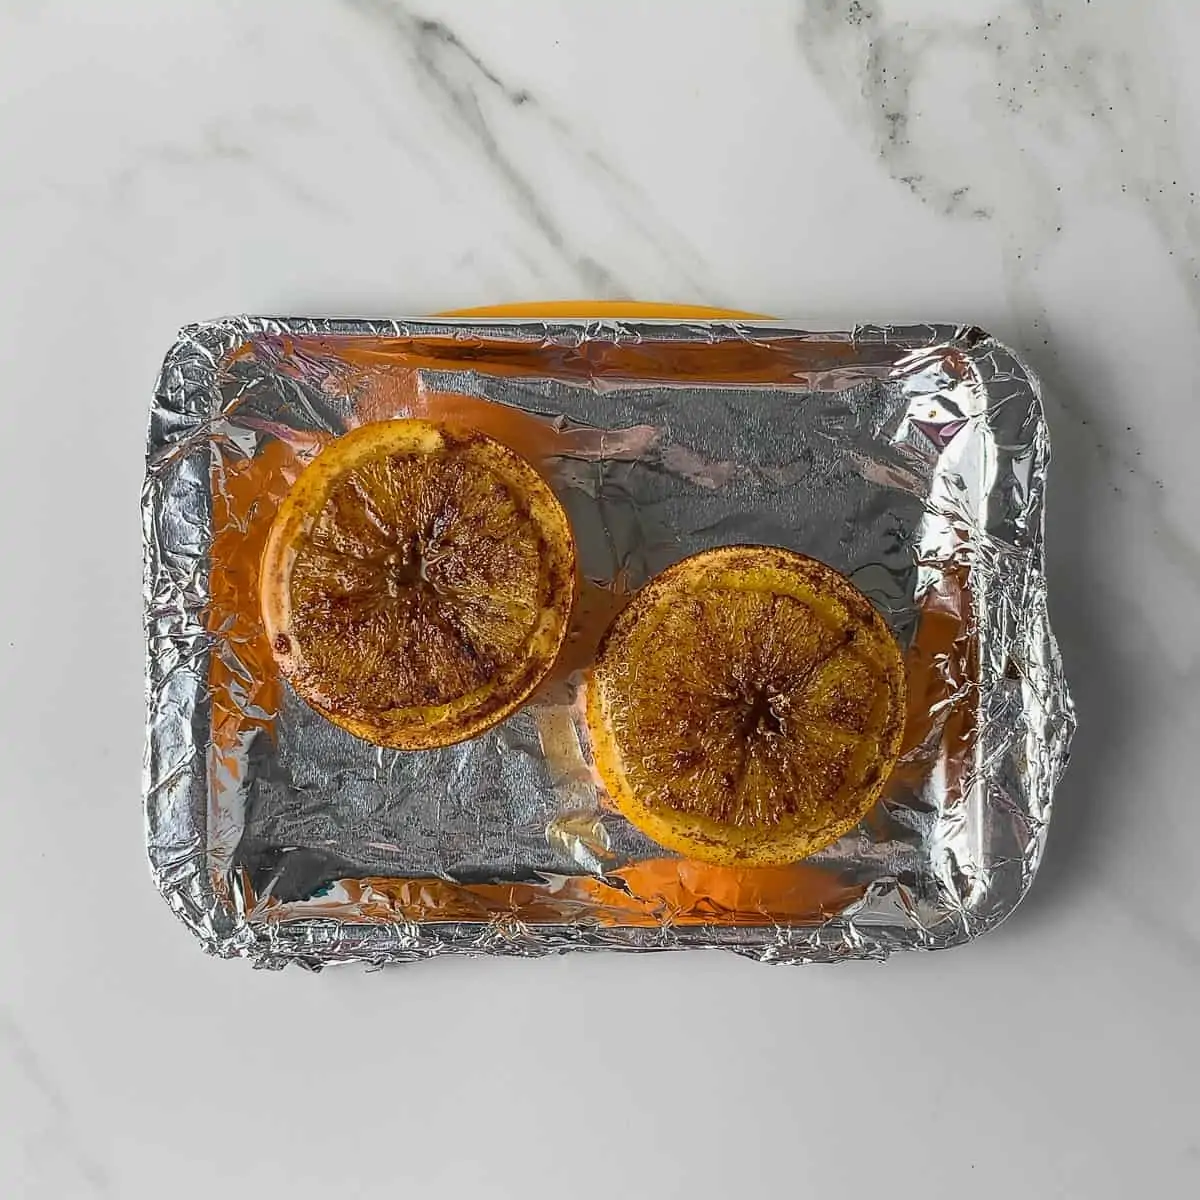 cooked baked oranges on baking sheet